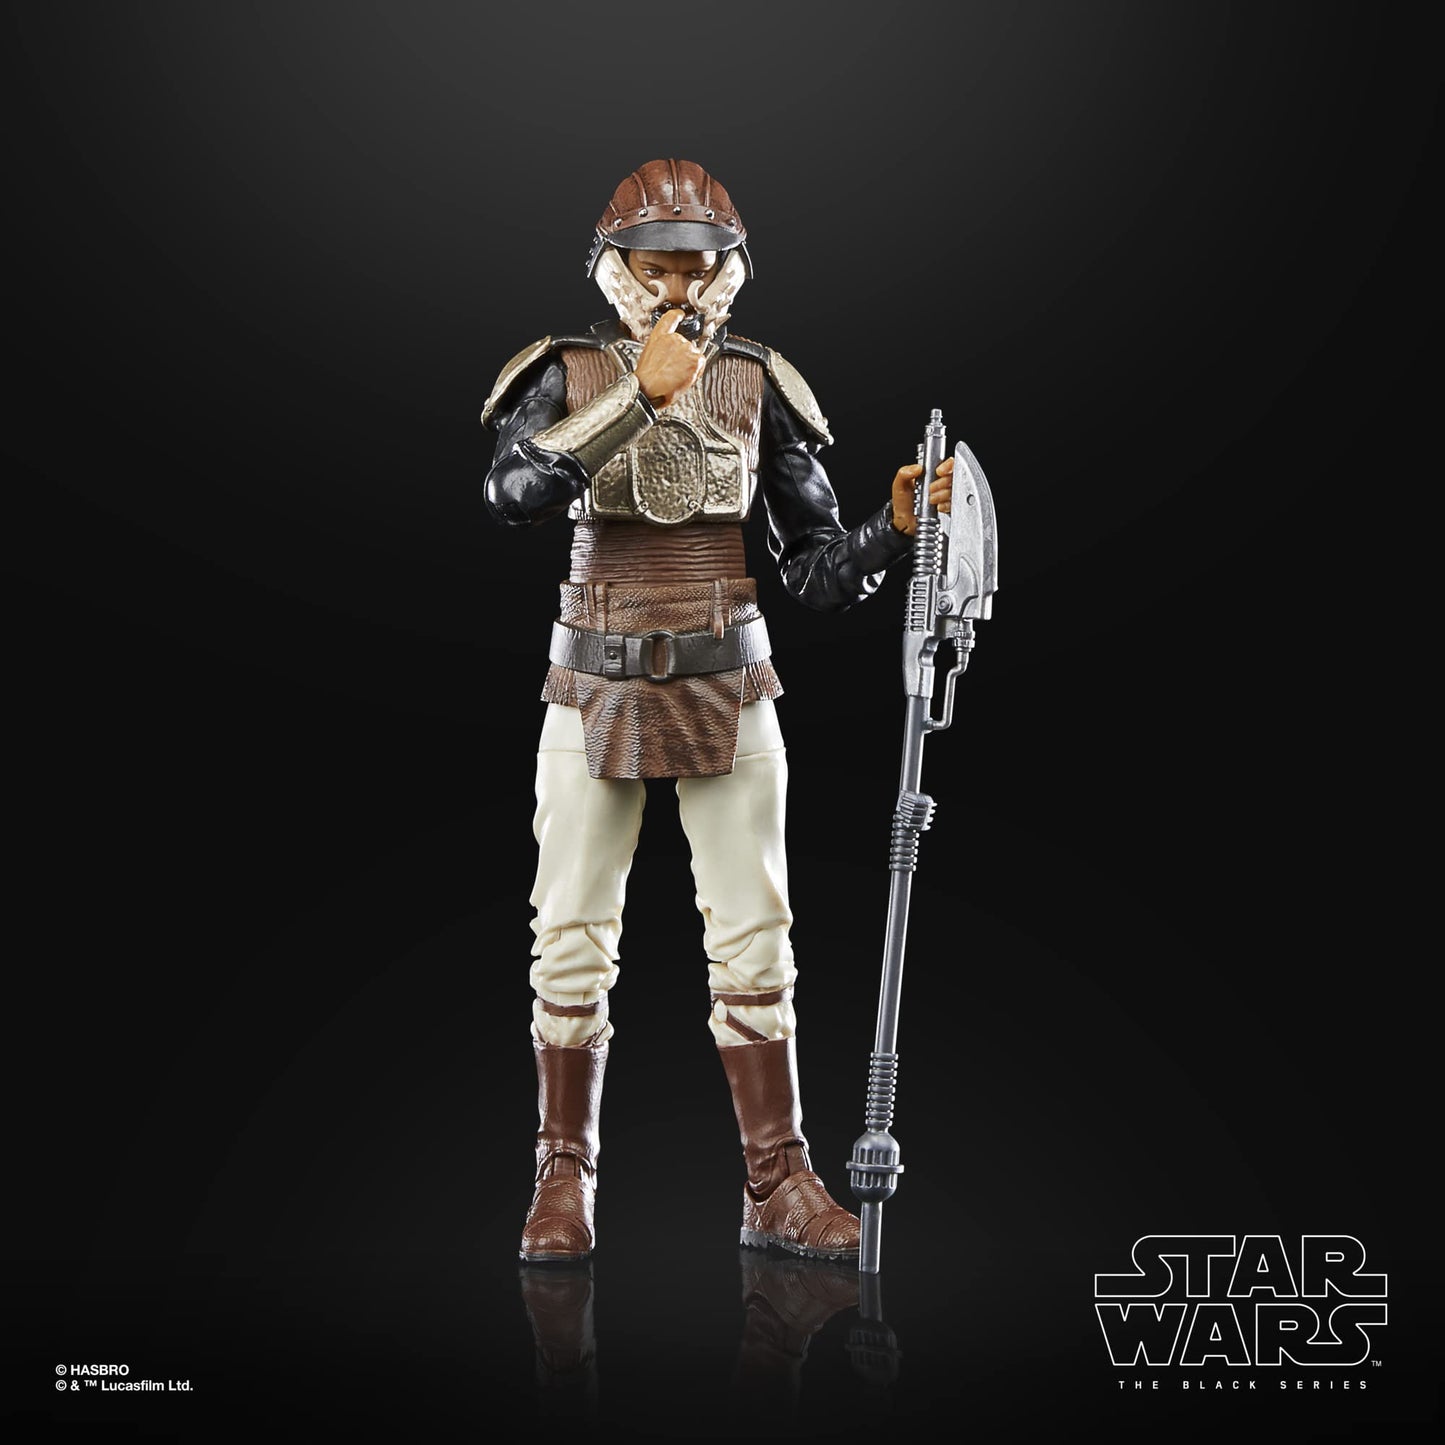 Star Wars: Return of the Jedi Lando Calrissian (Skiff Guard) Action Figure